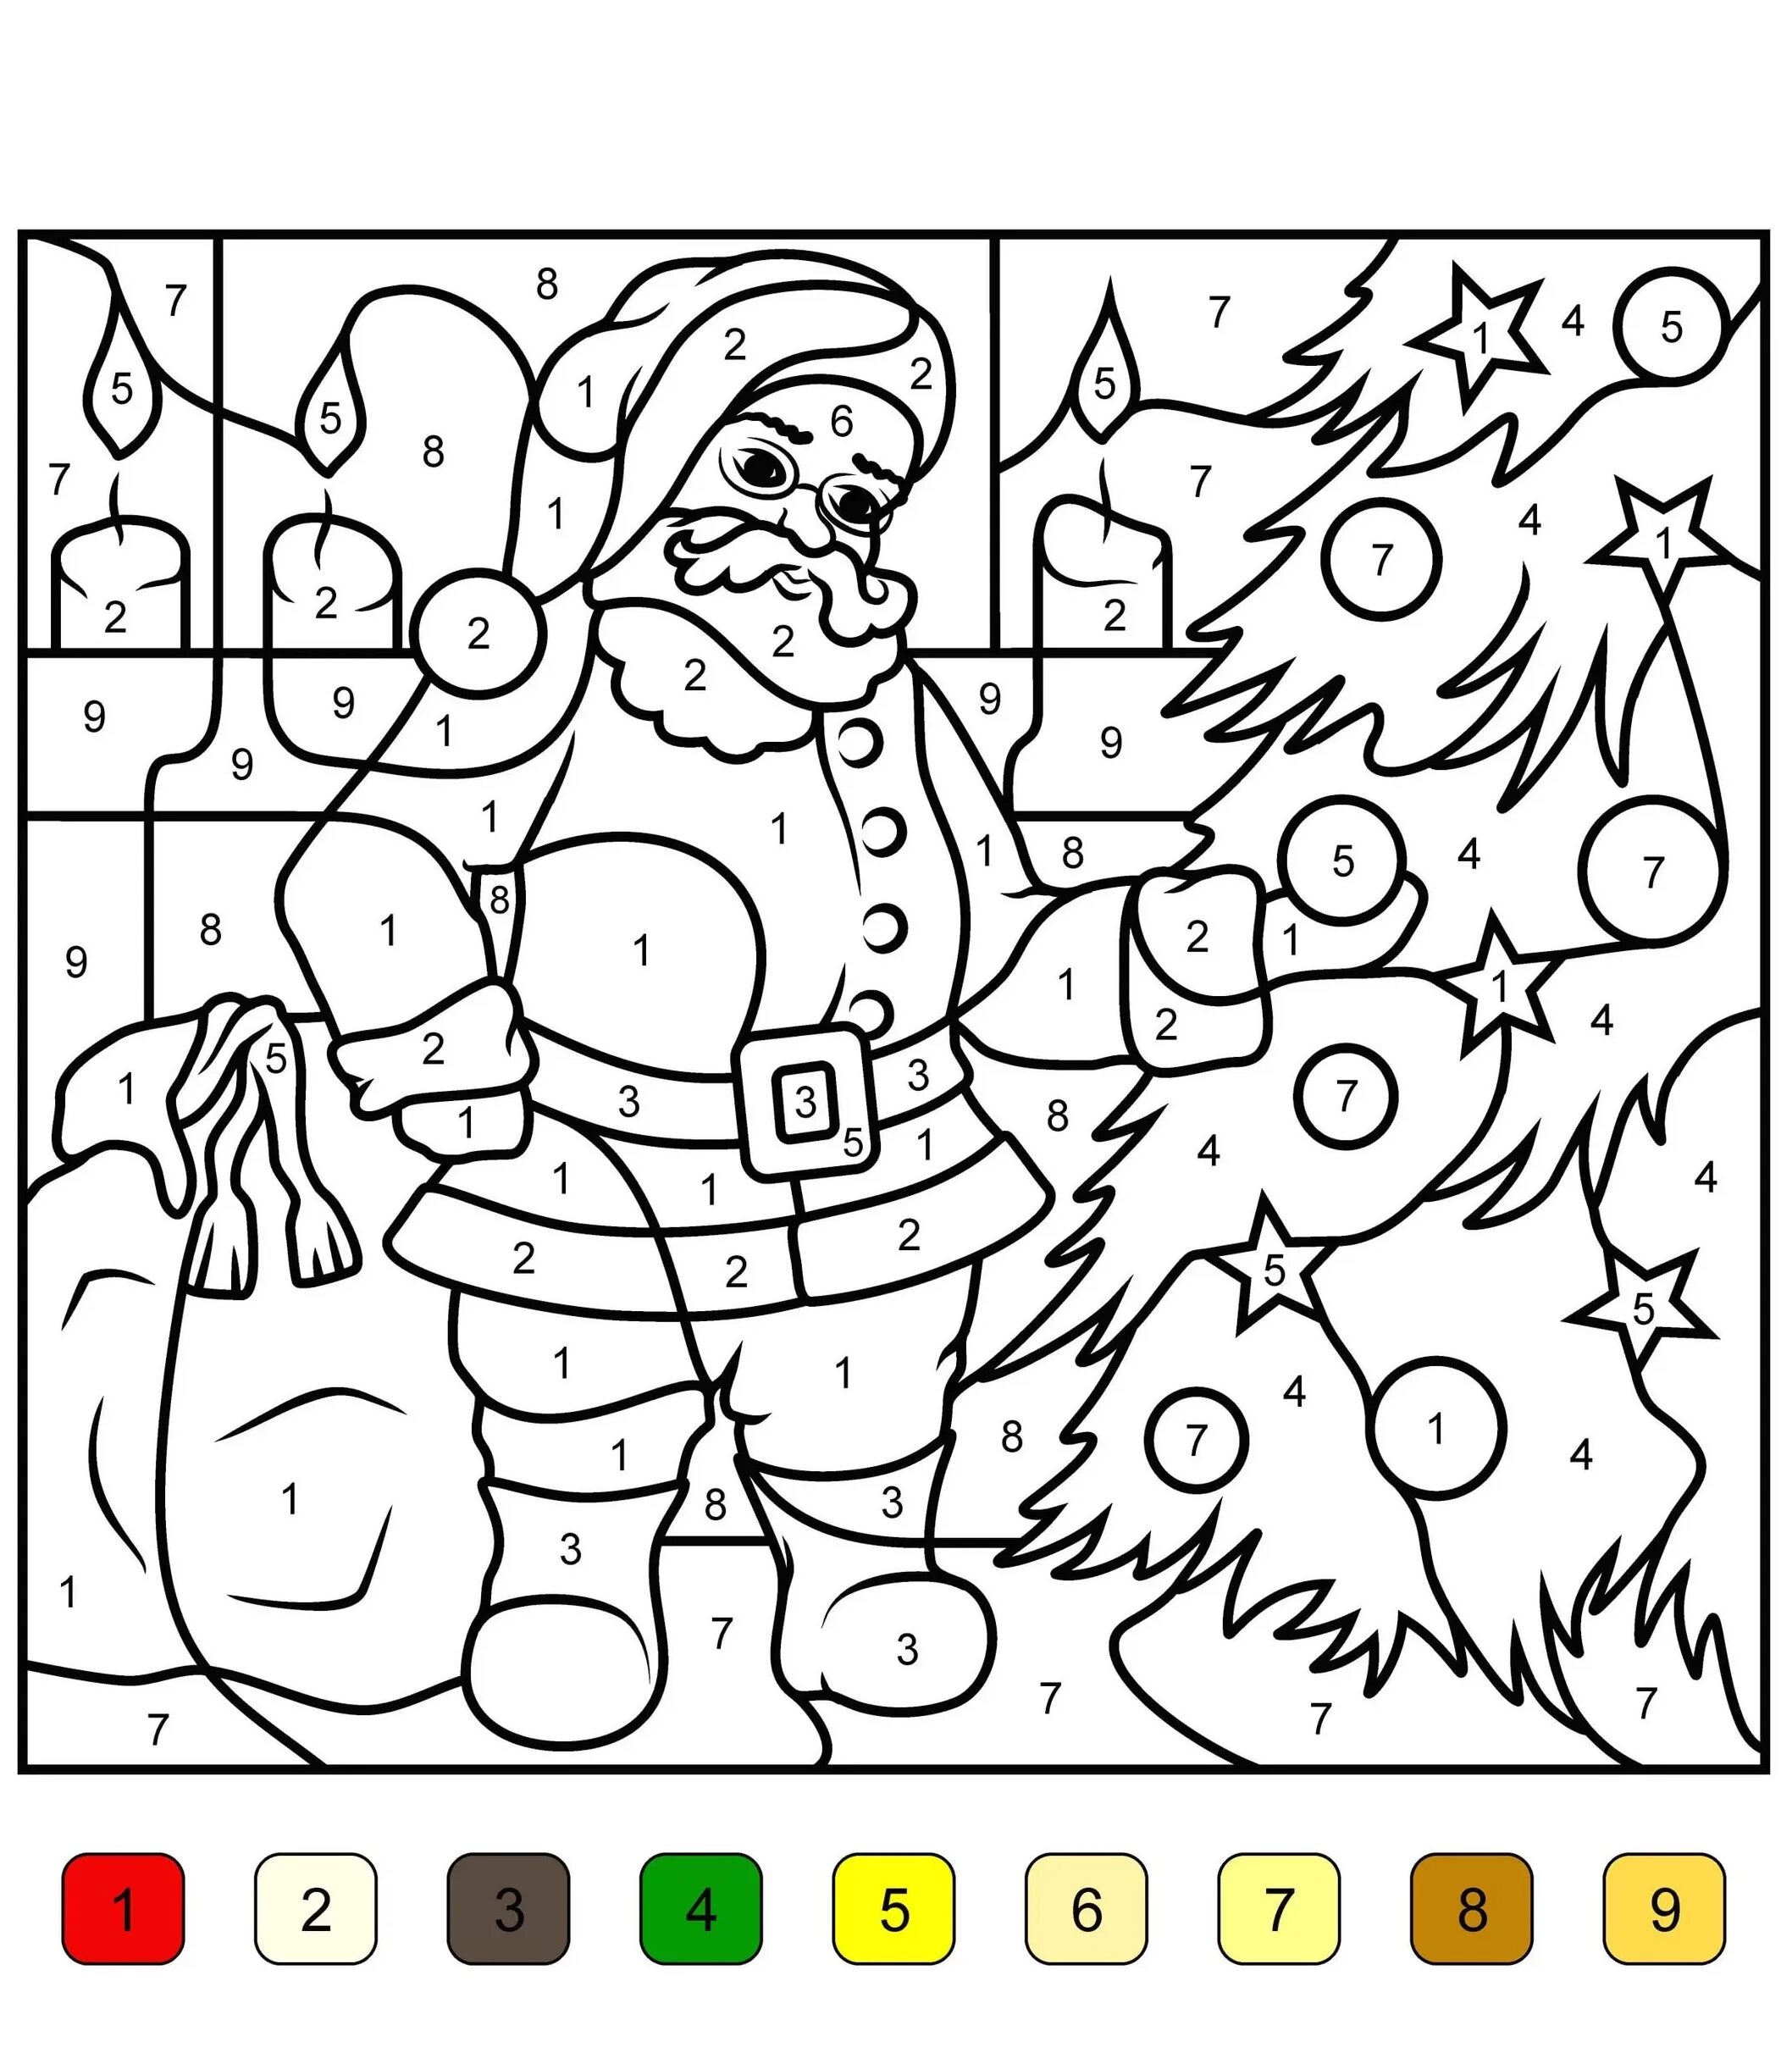 Snowman by color #7